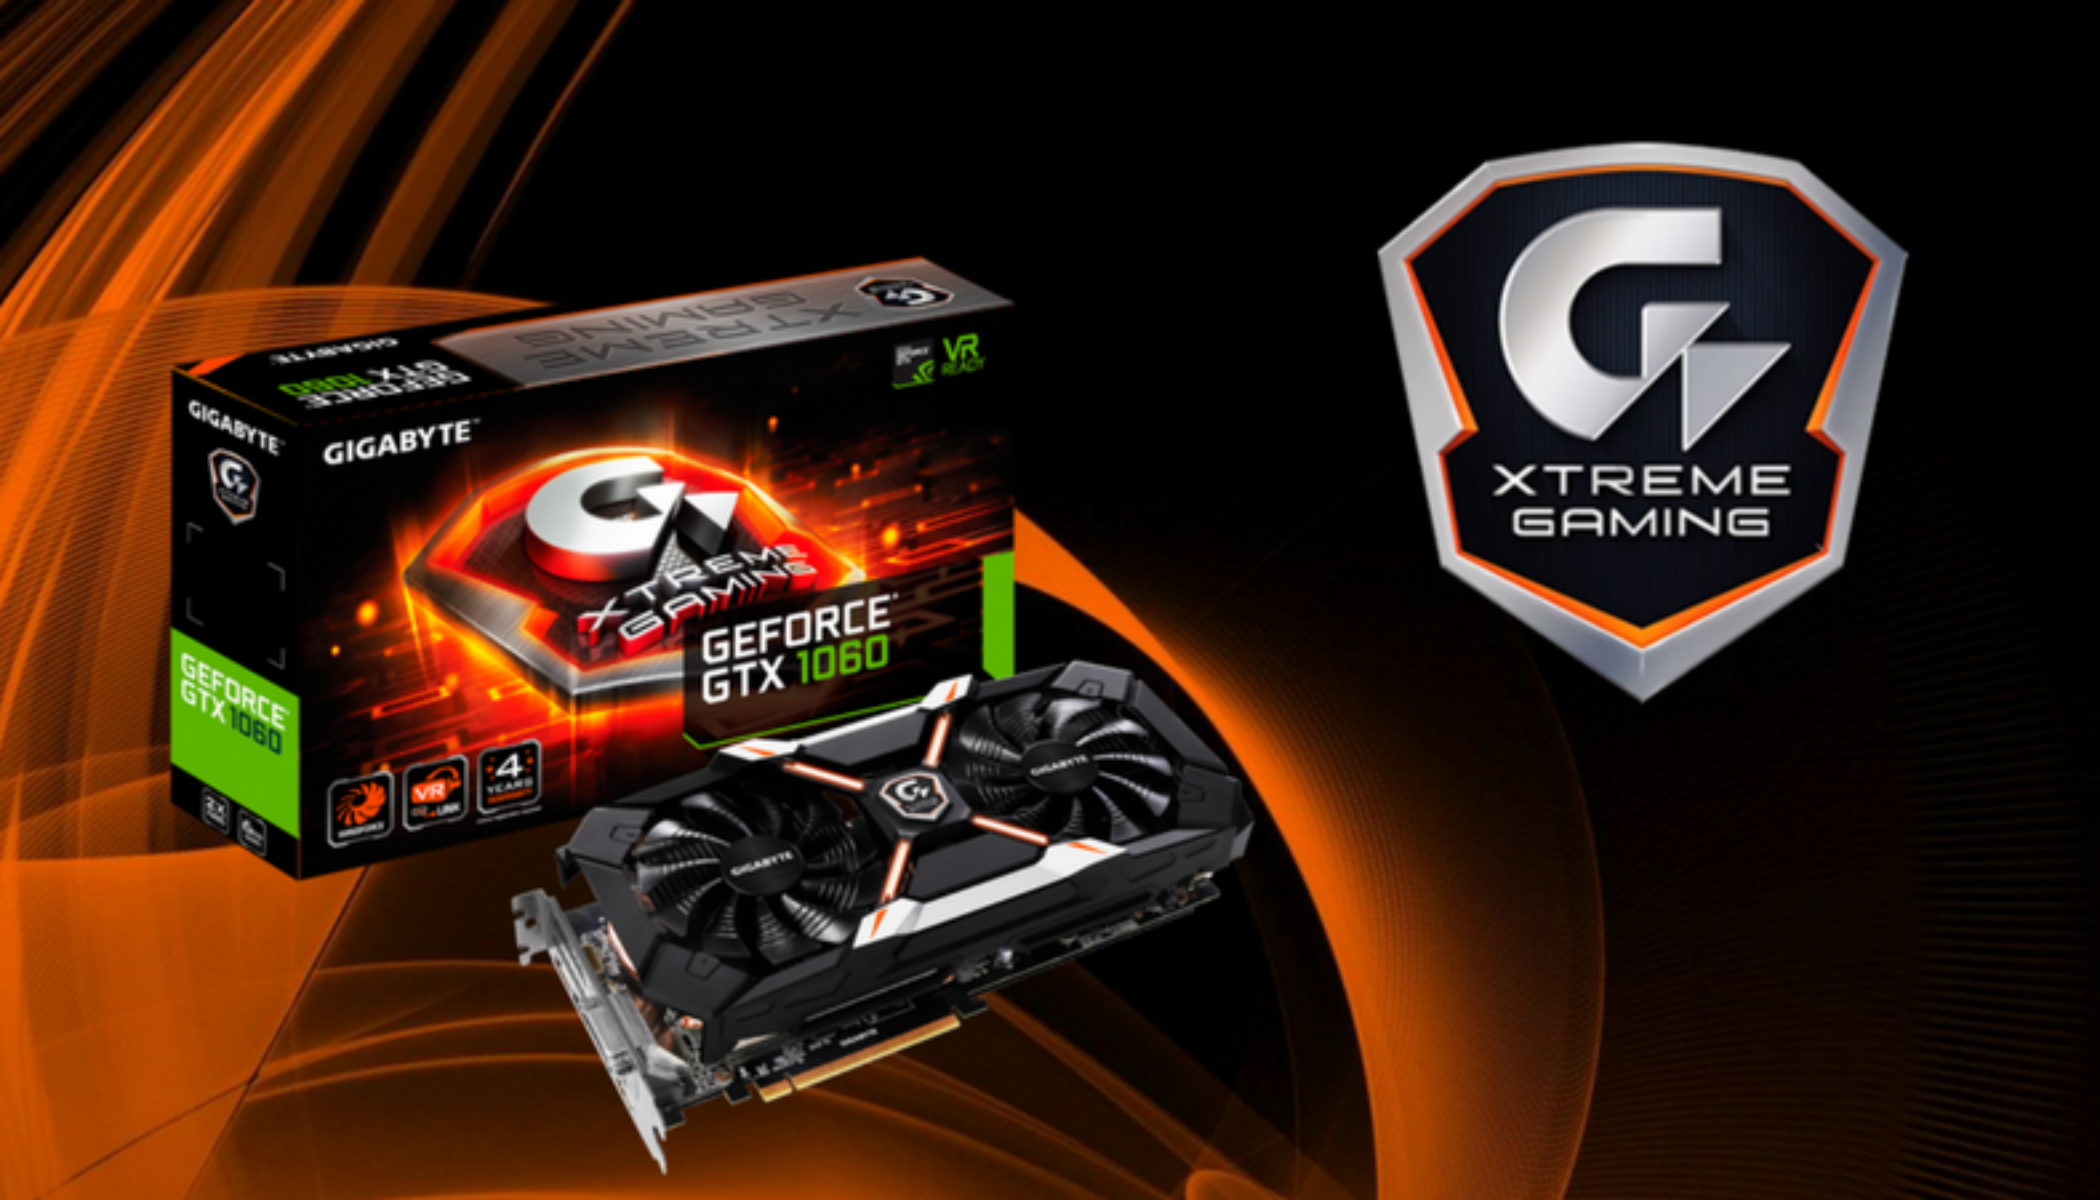 GTX 1060 Xtreme Gaming 6g. Gigabyte GEFORCE GTX 1060 Xtreme Gaming. 1060 6 ГБ Xtreme. GTX 1060 extreme Gaming 6g.